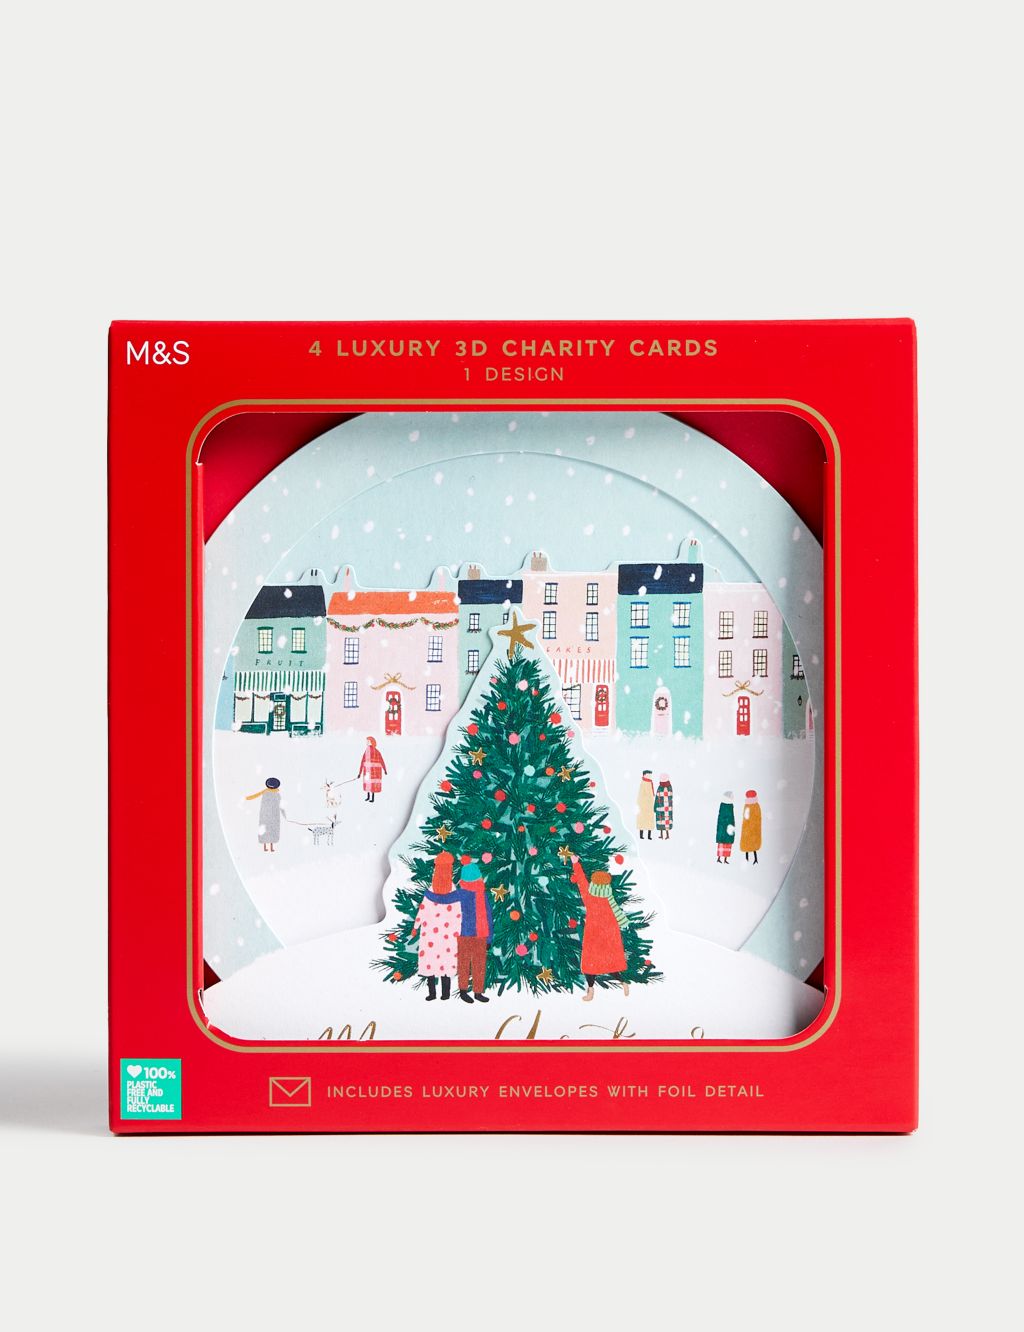 Luxury Charity Christmas Cards - 3D Snow Globe Design